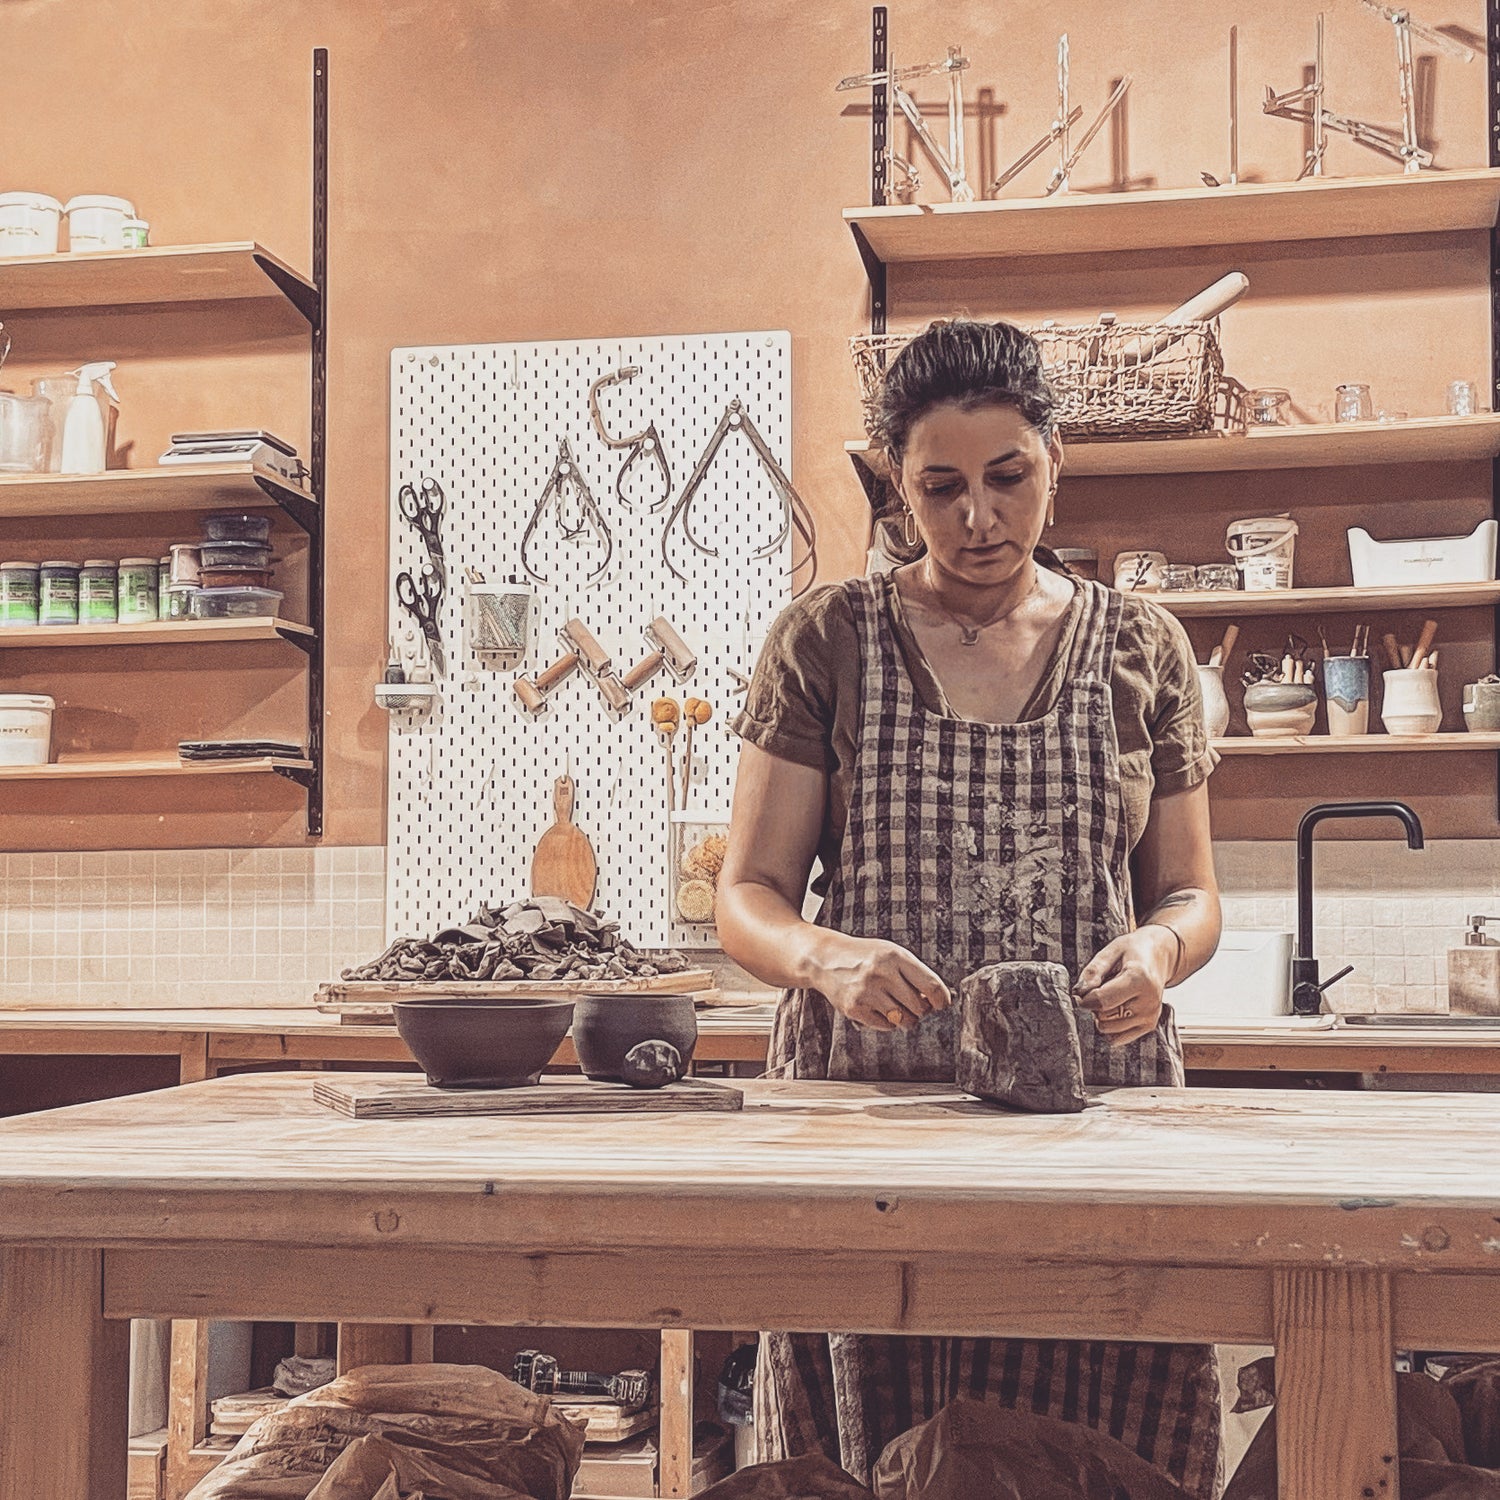 Artiste artisane céramiste entrain de travailler dans son atelier en France